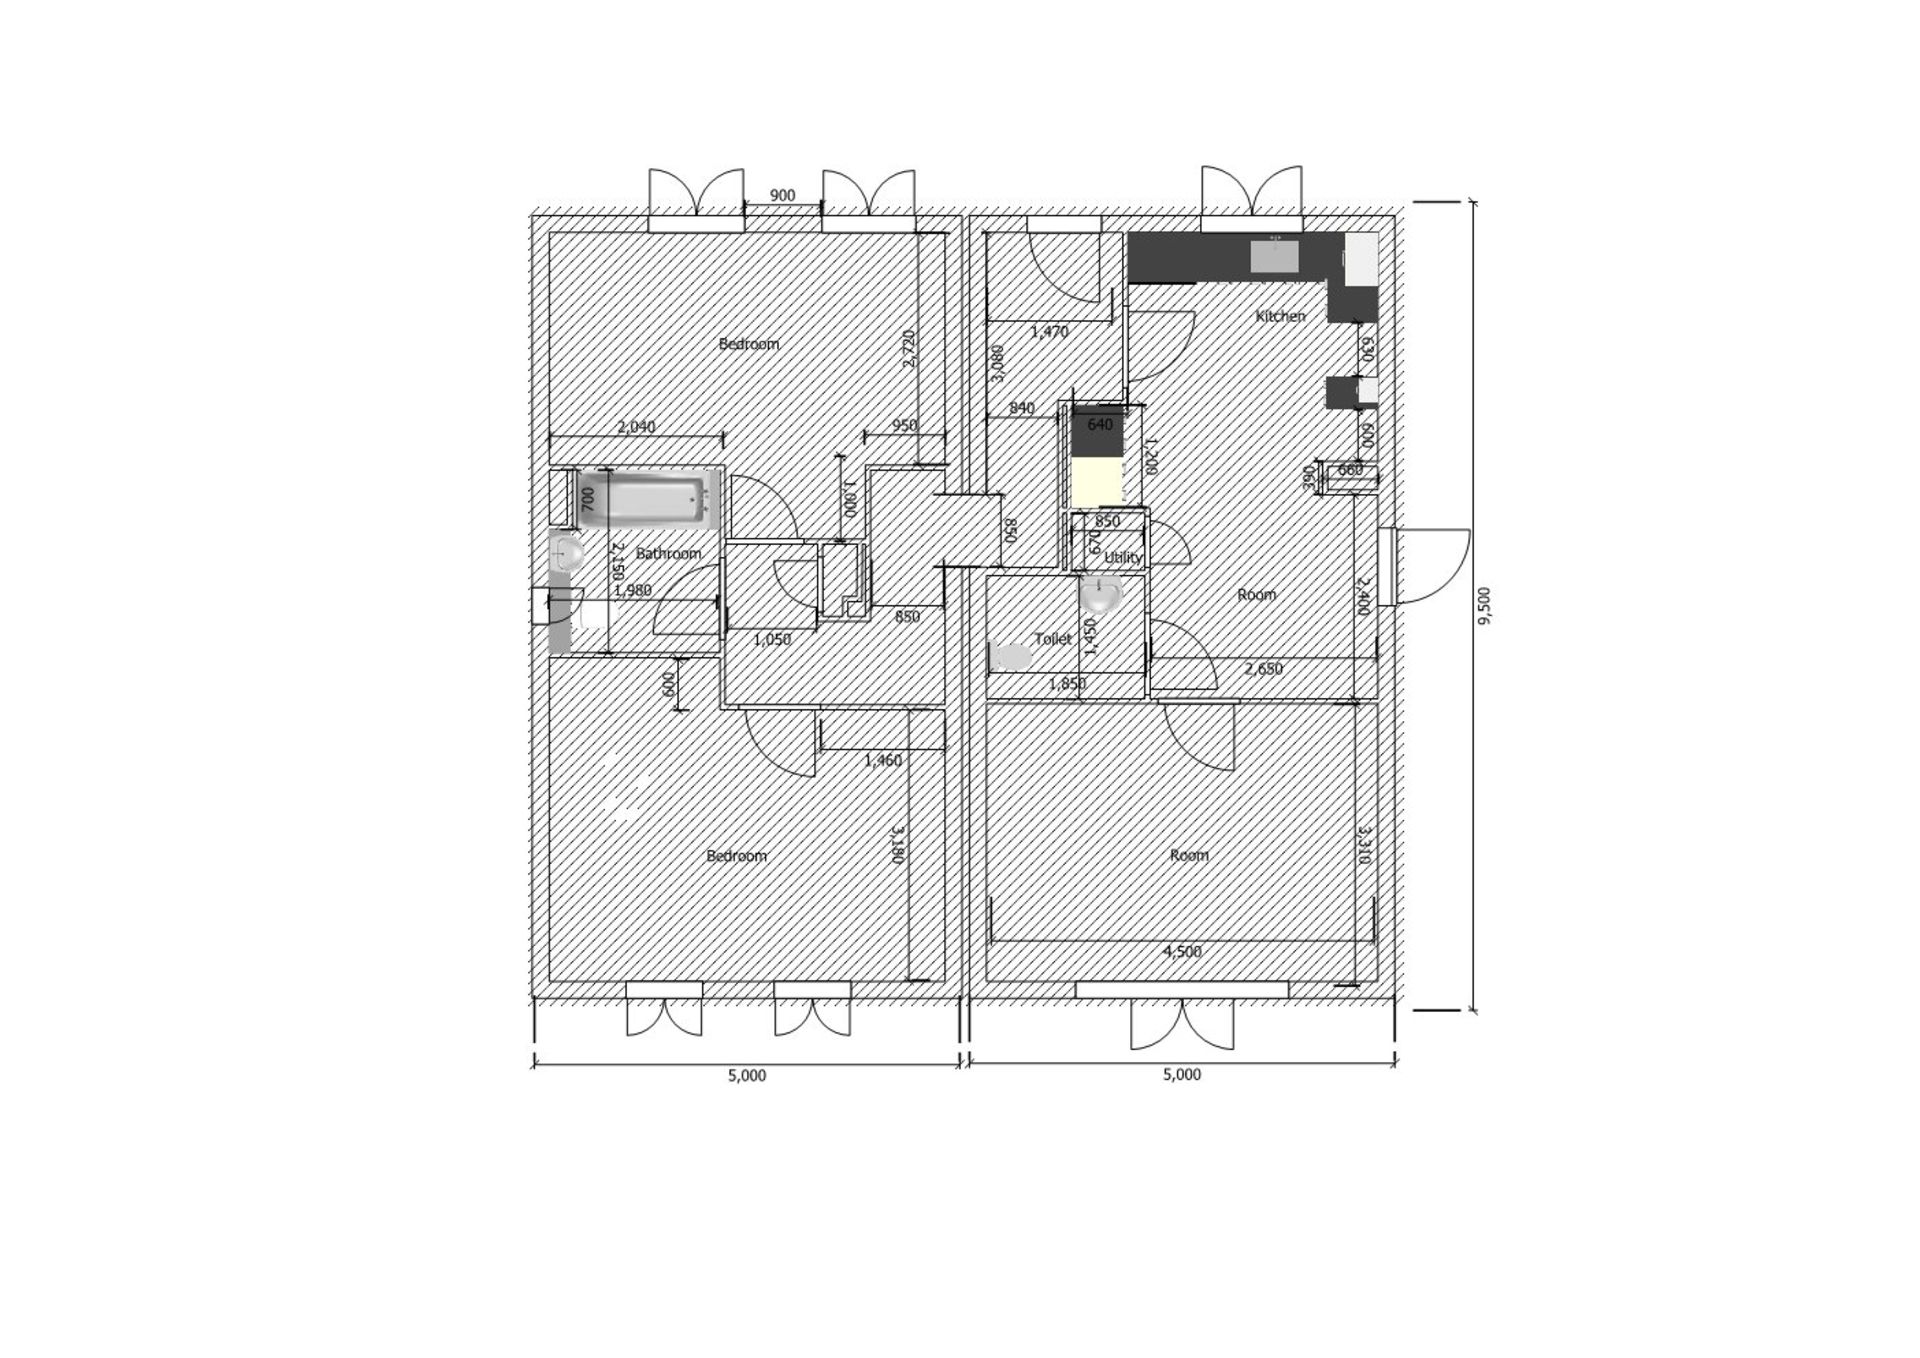 2 Bedroom Antracite Clad & Rendered Modular Bungalow - Image 3 of 62